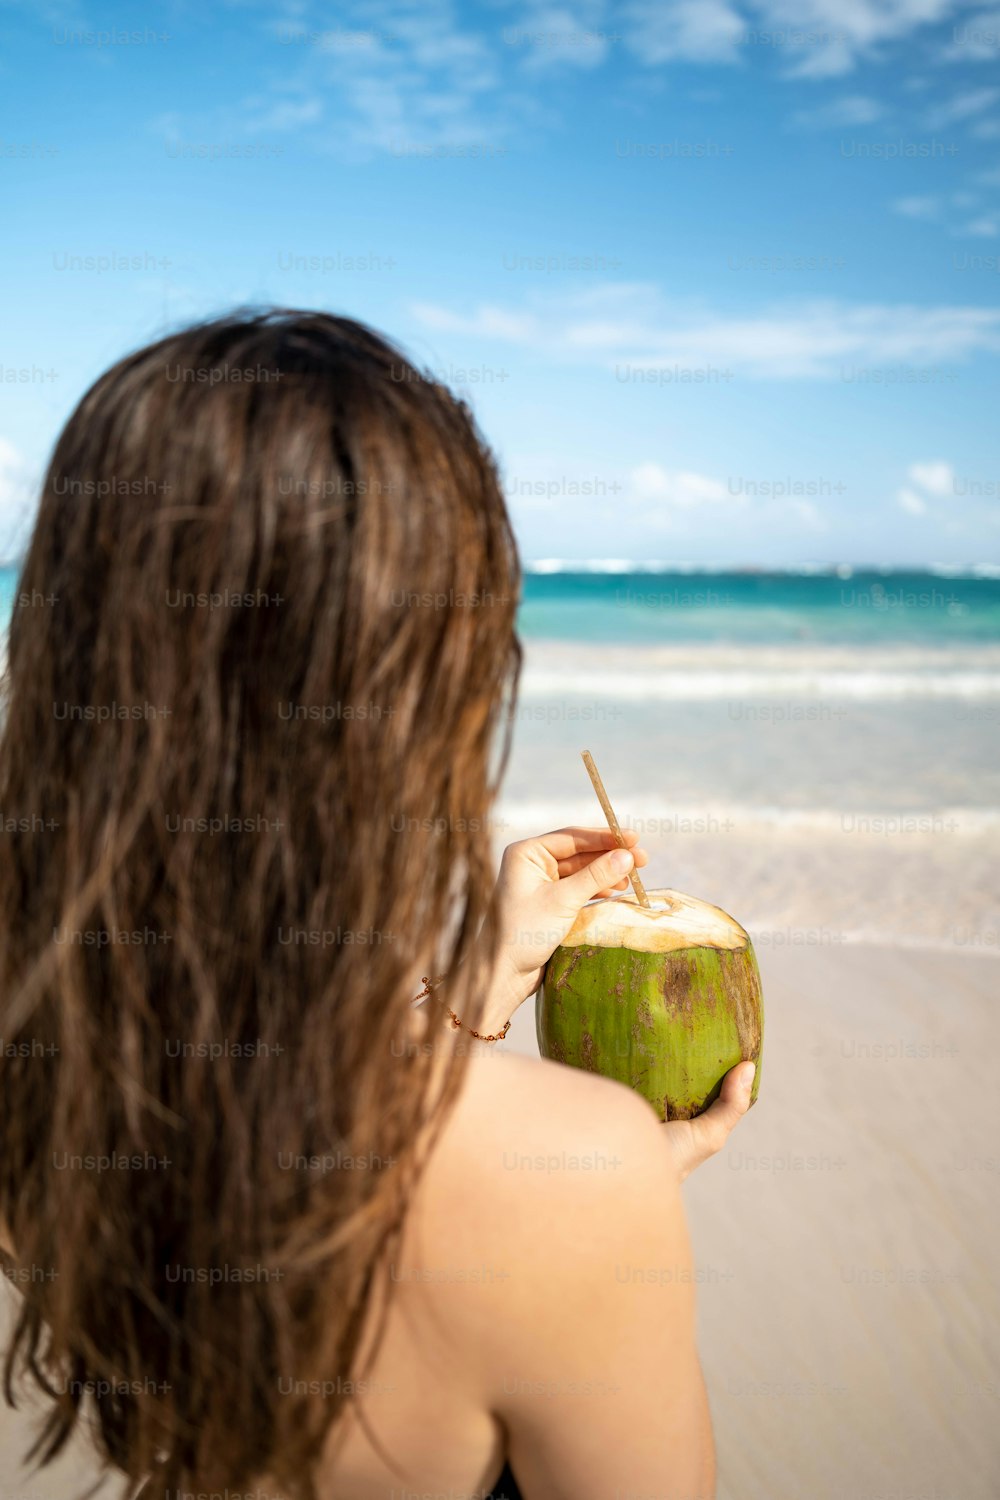 a woman holding a coconut on the beach